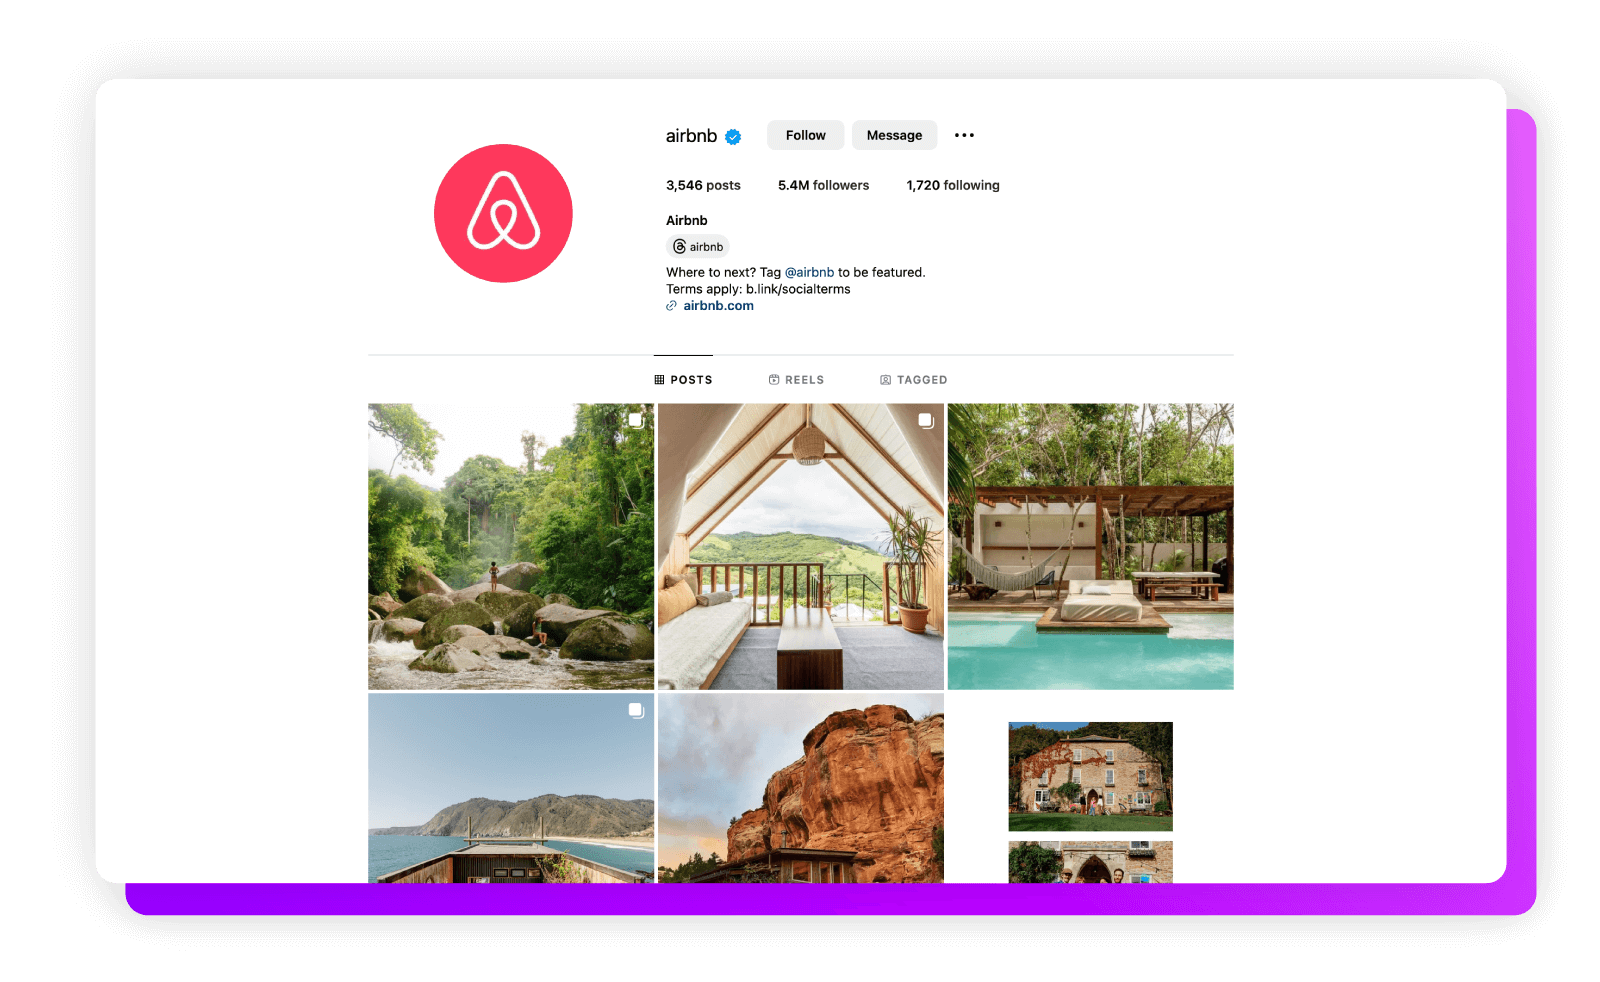 Airbnb social media as a brand asset